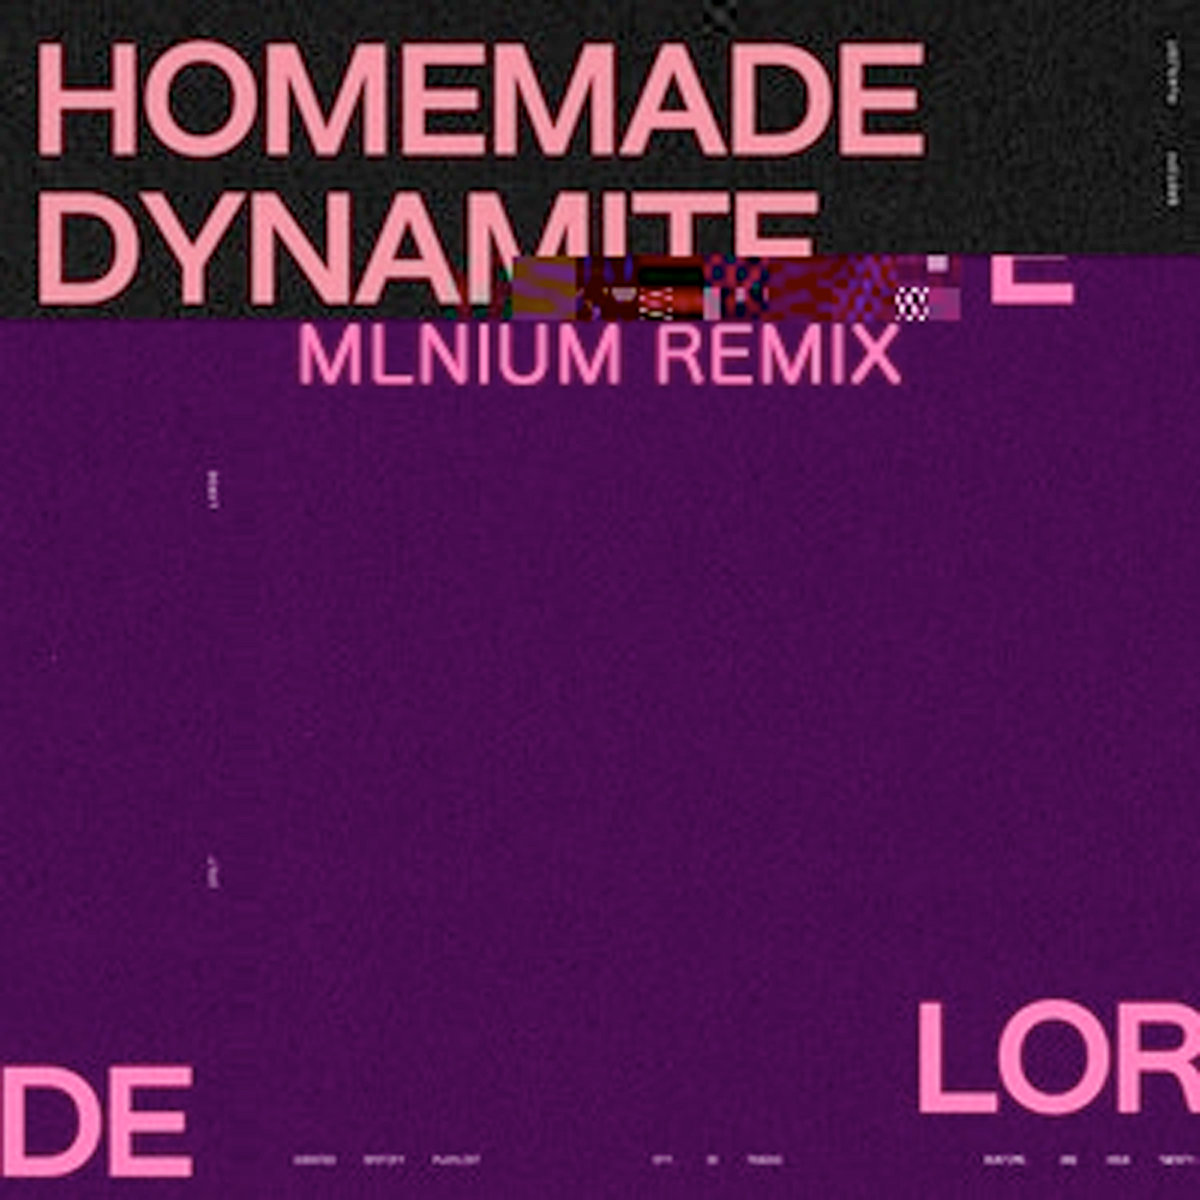 Lorde Homemade Dynamite